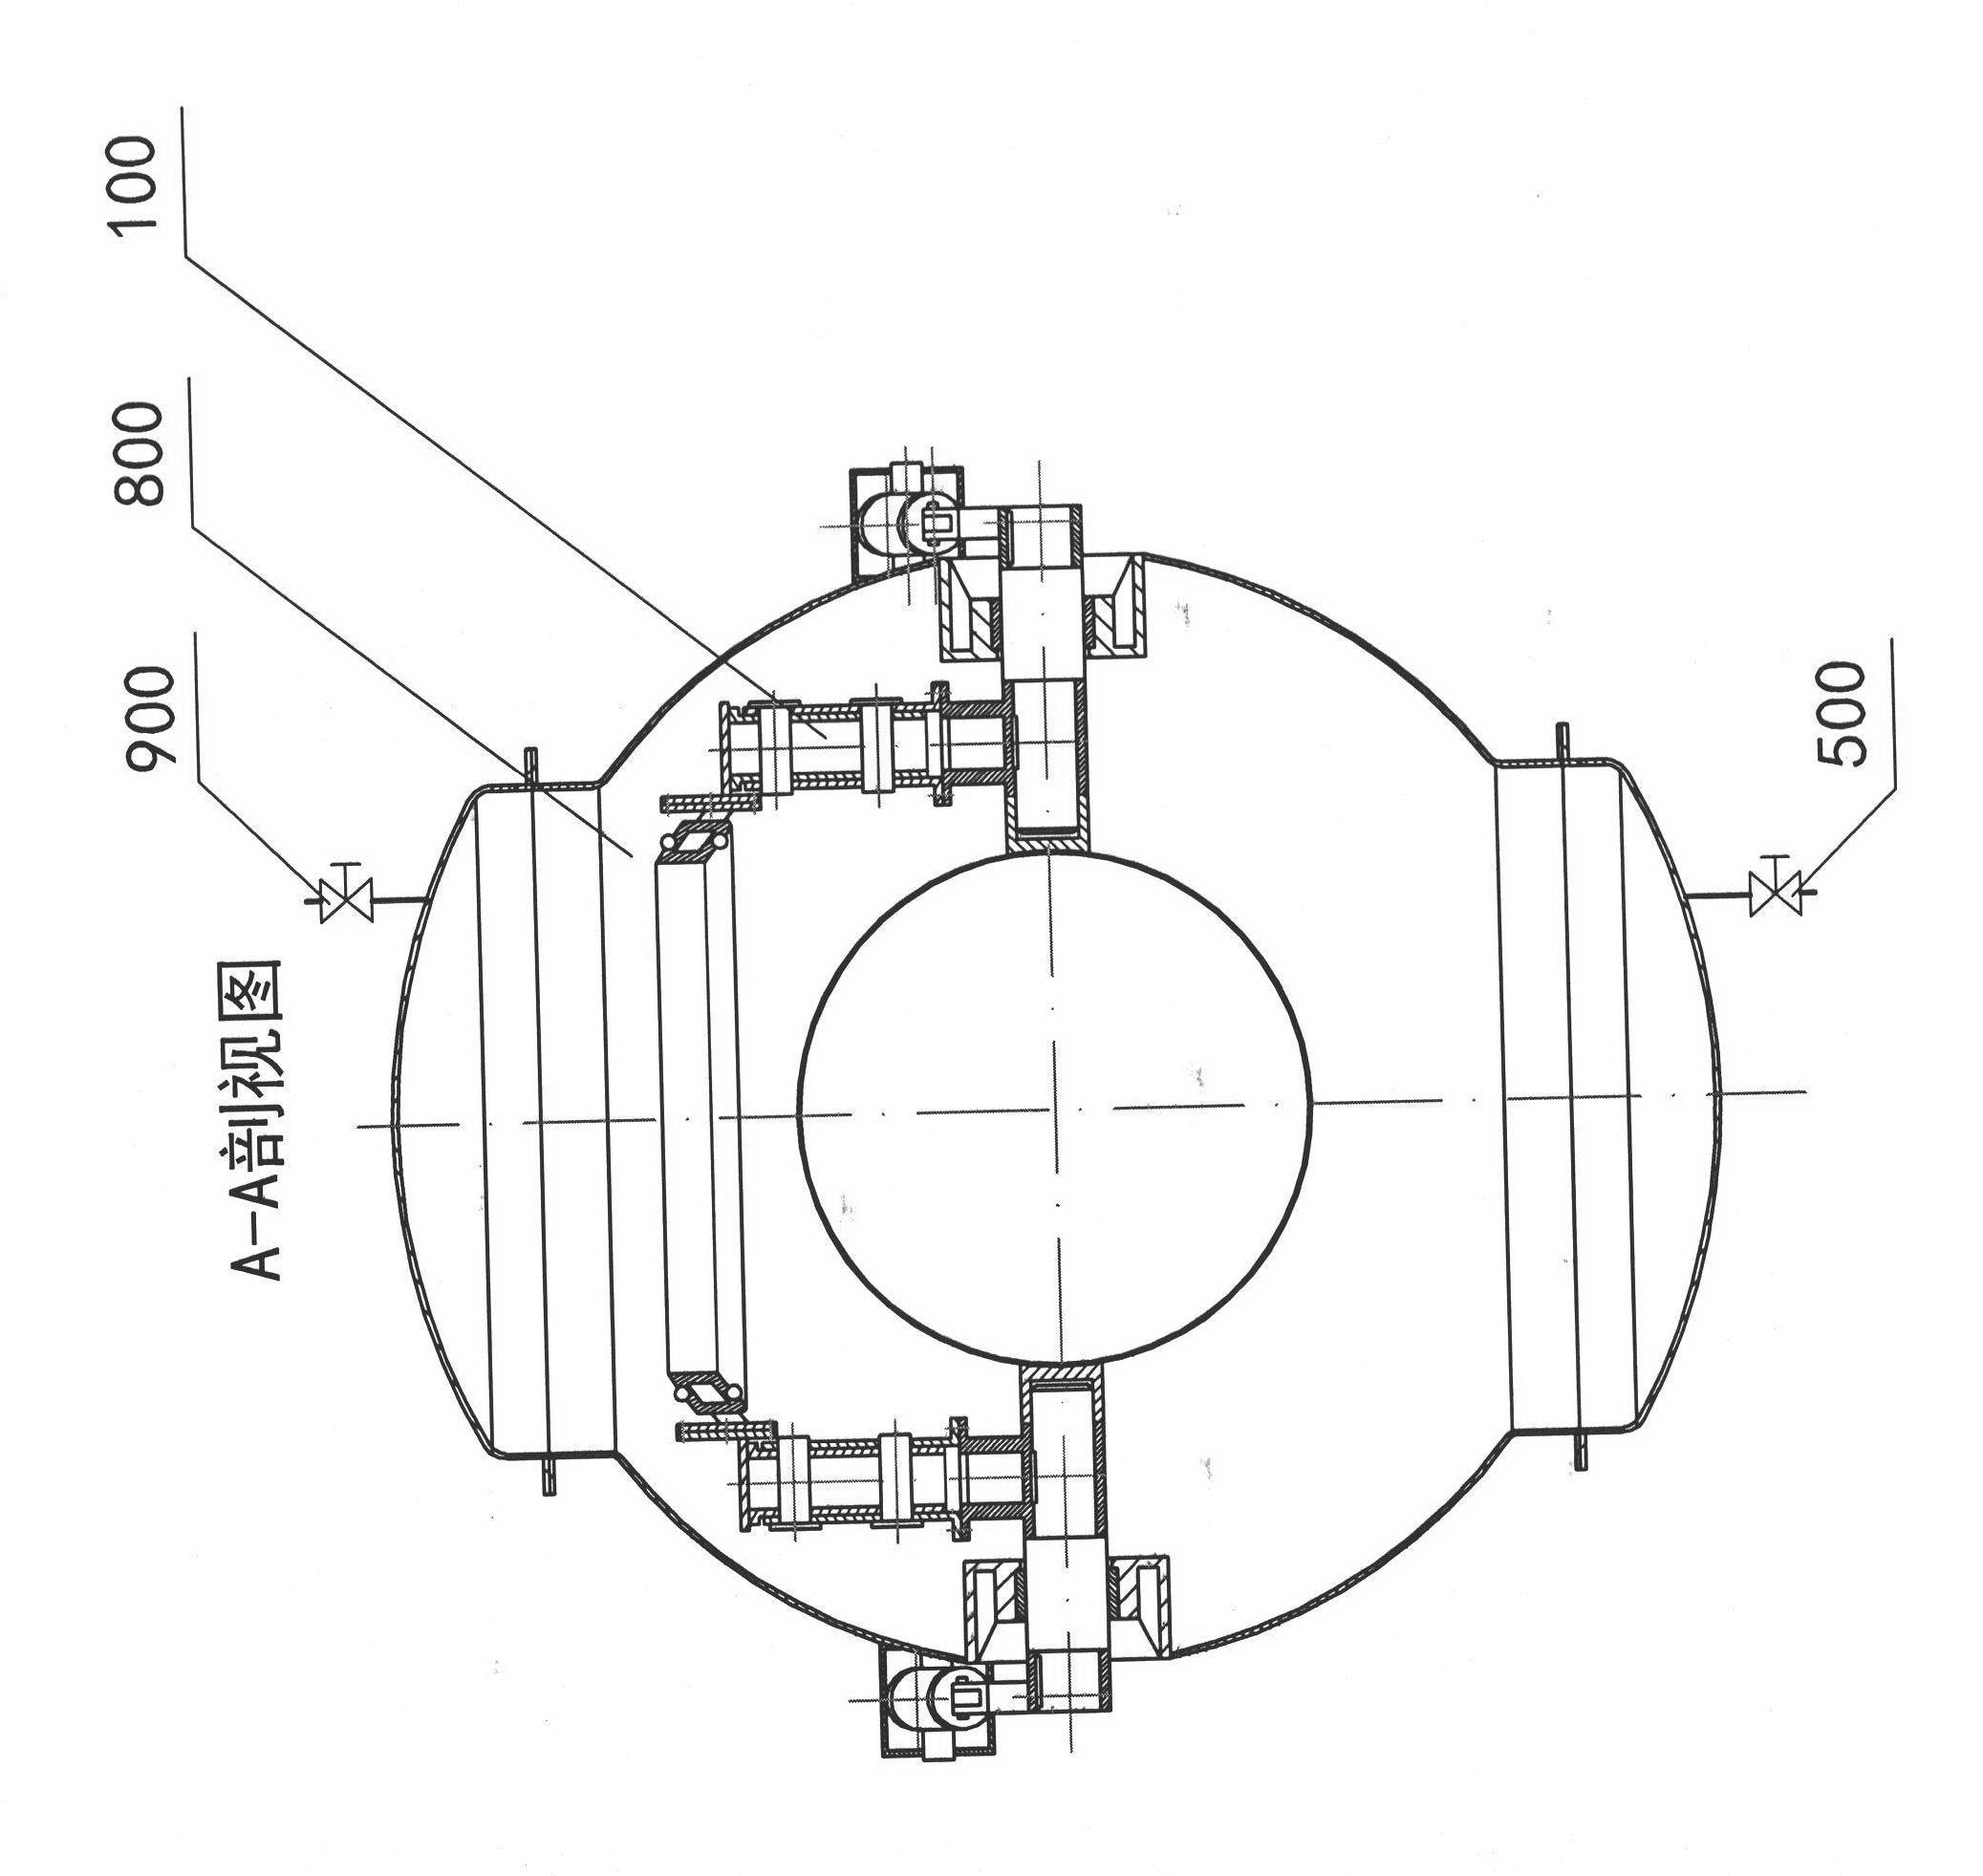 Full-closed type double-ball type interlocking separation valve